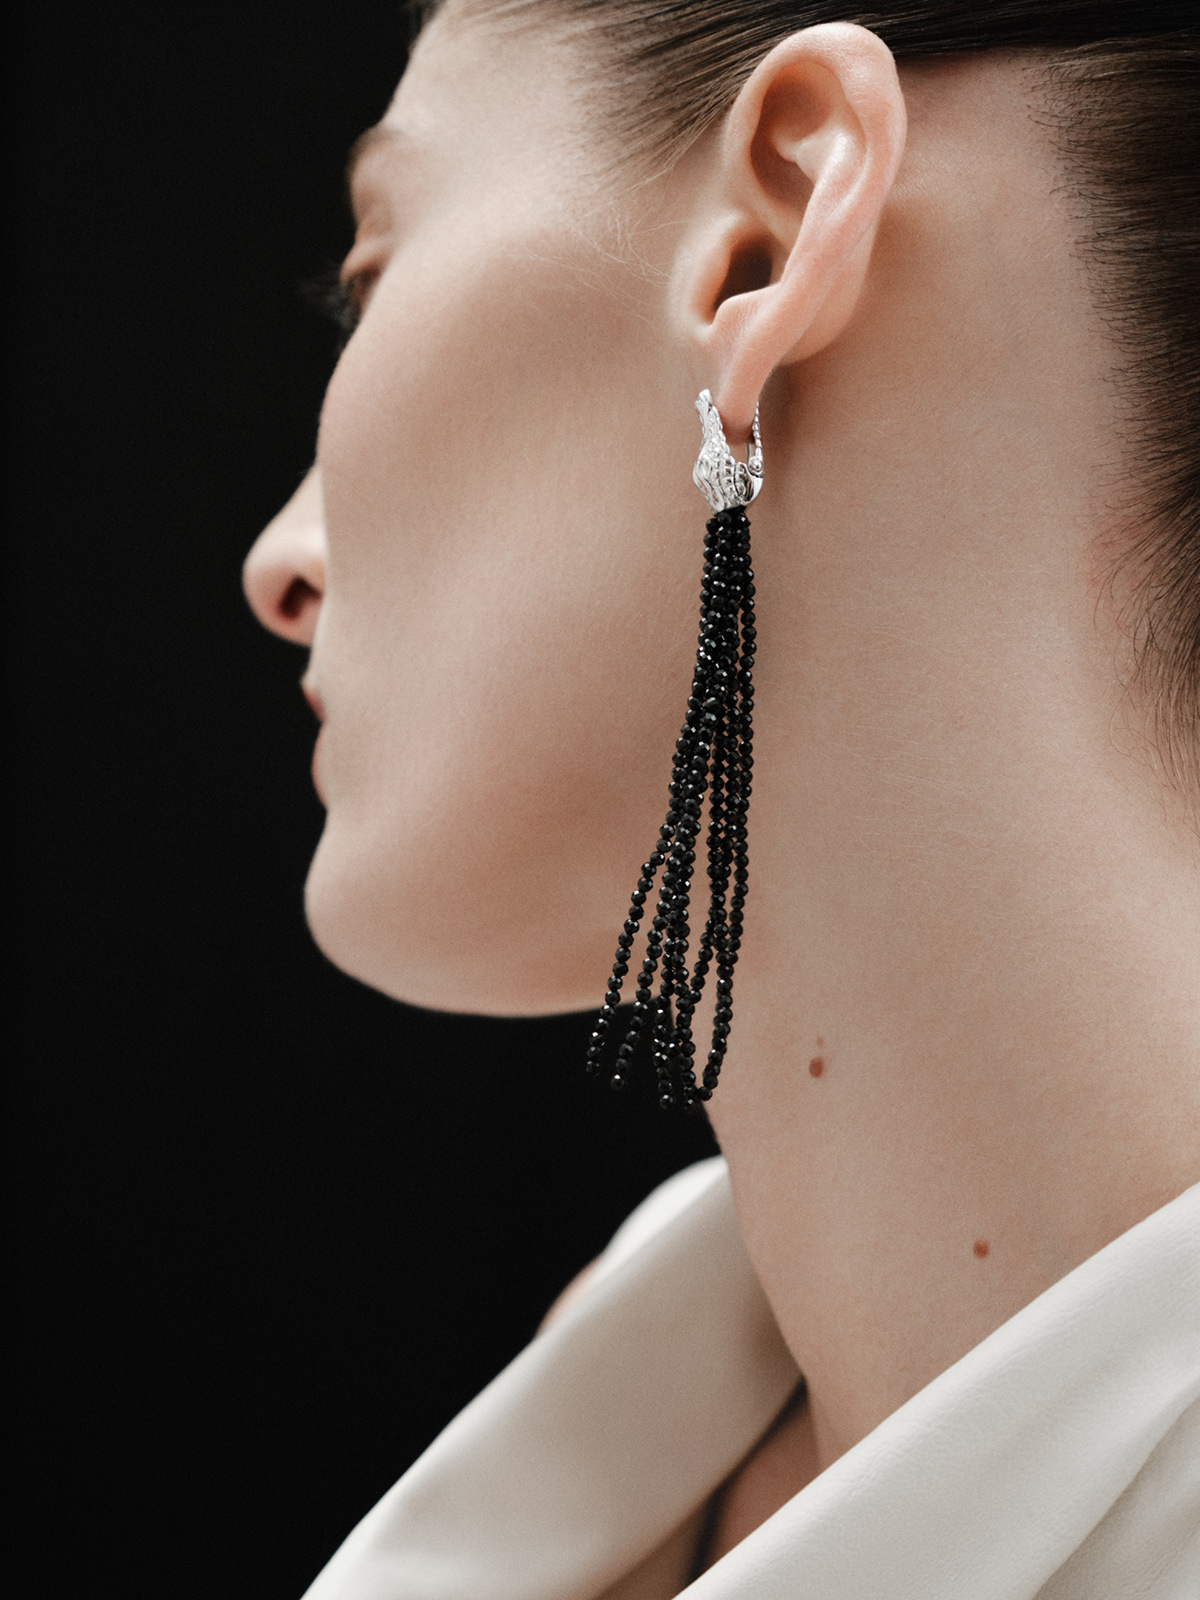 Long 925 silver earrings shaped like a crocodile and black spine.